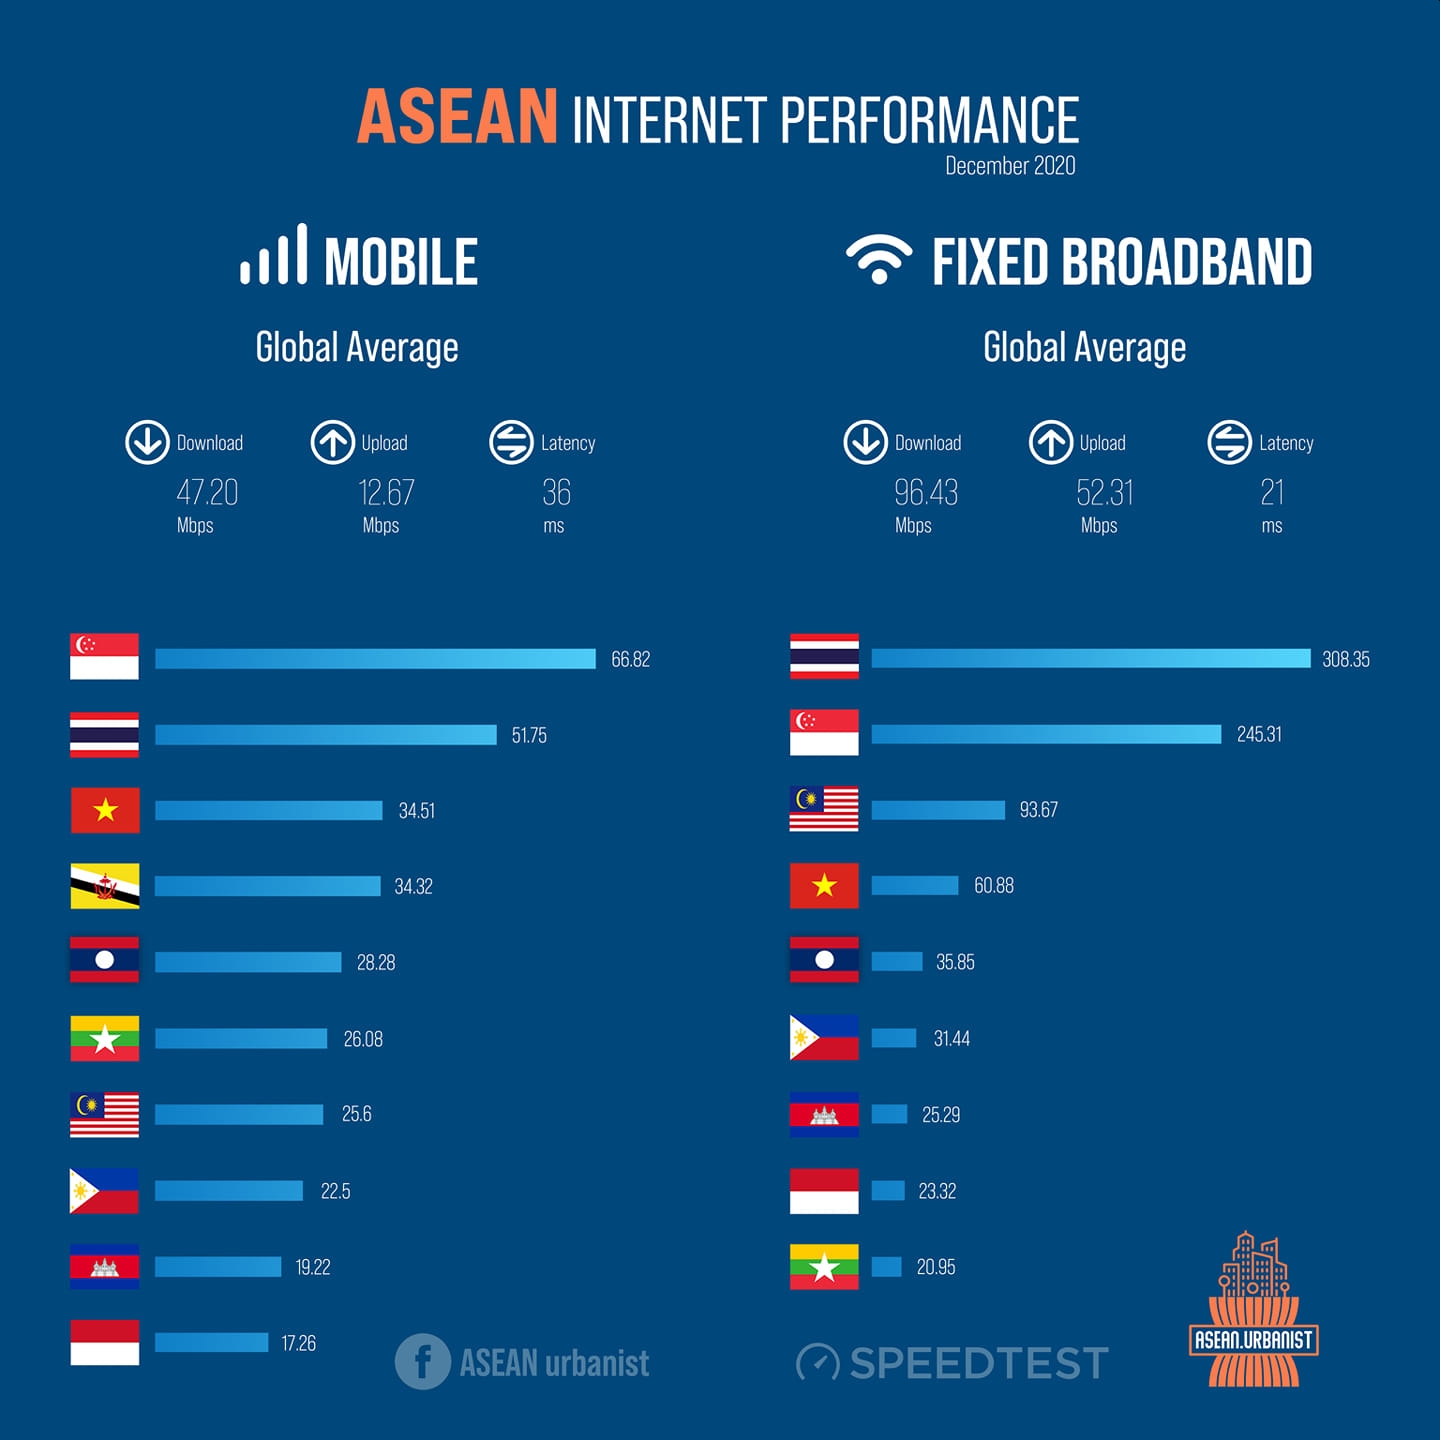 Speedtest: Malaysia’s mobile speeds lag behind 6 ASEAN countries